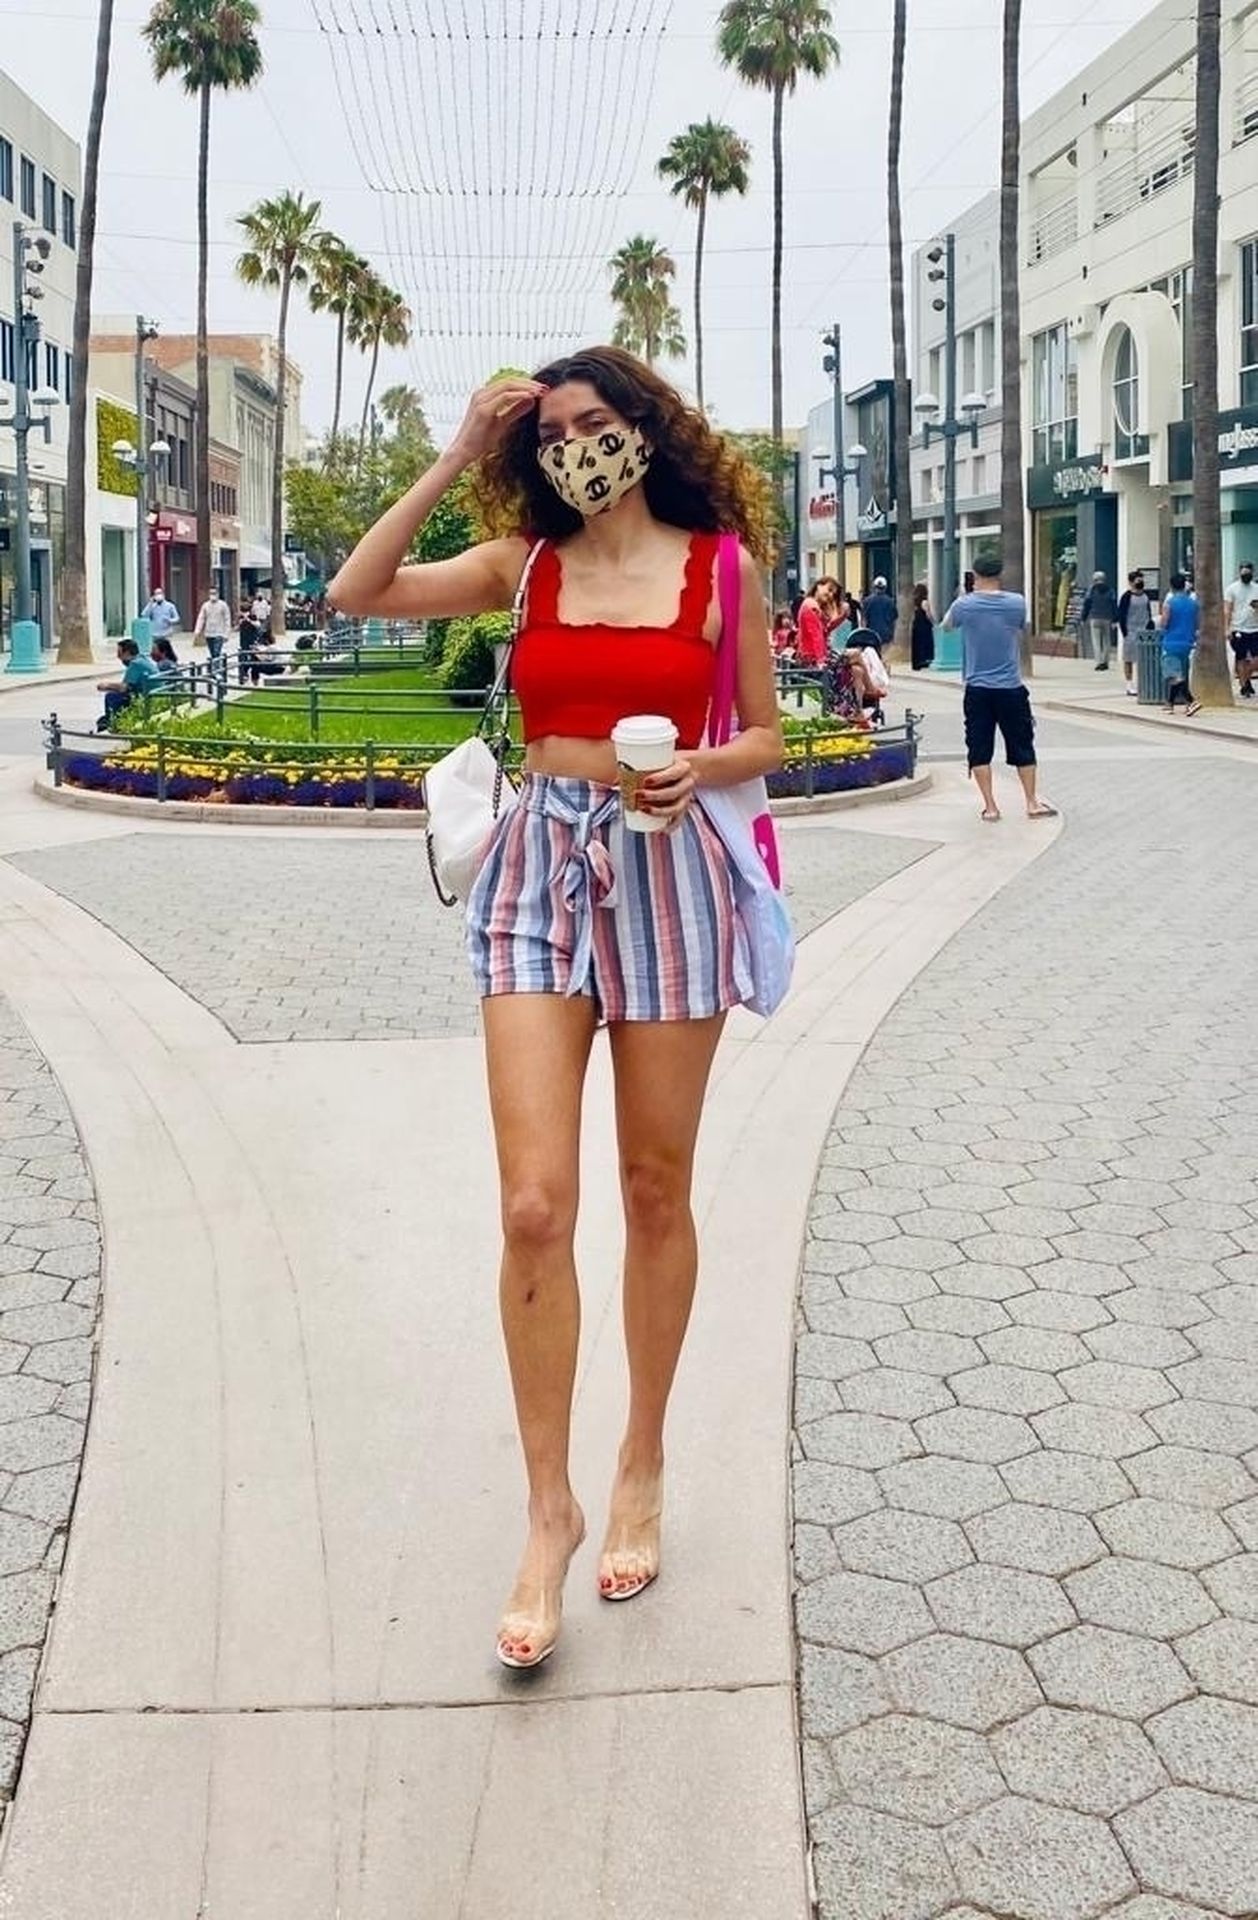 Sexy Blanca Blanco Grabs Coffee in Santa Monica (14 Photos)